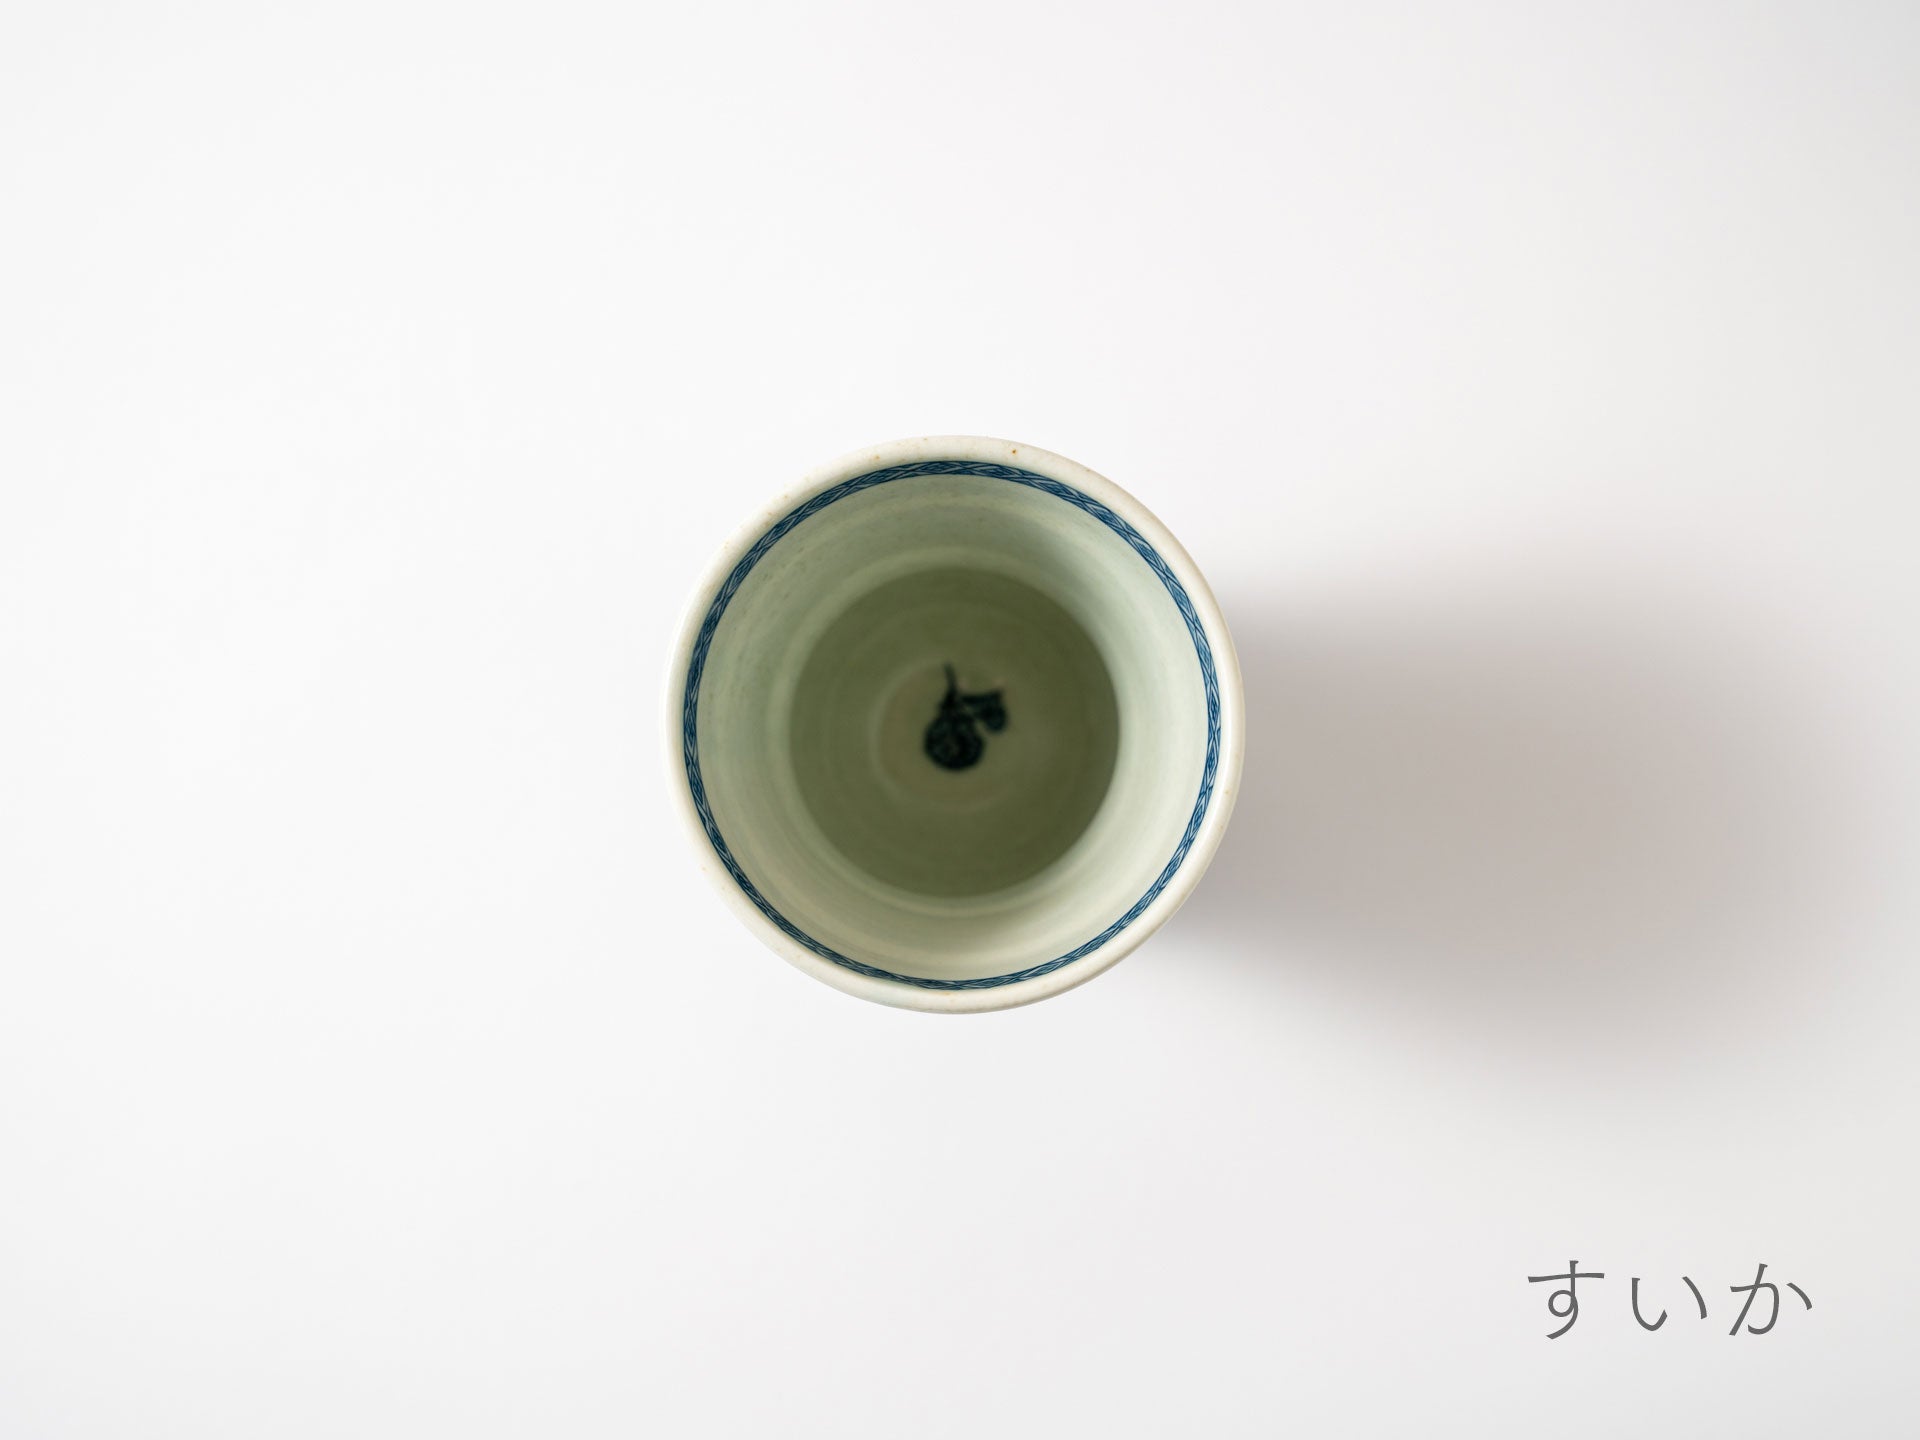 Fluctuation Free Cup [Sachiko Niijima_23ex]